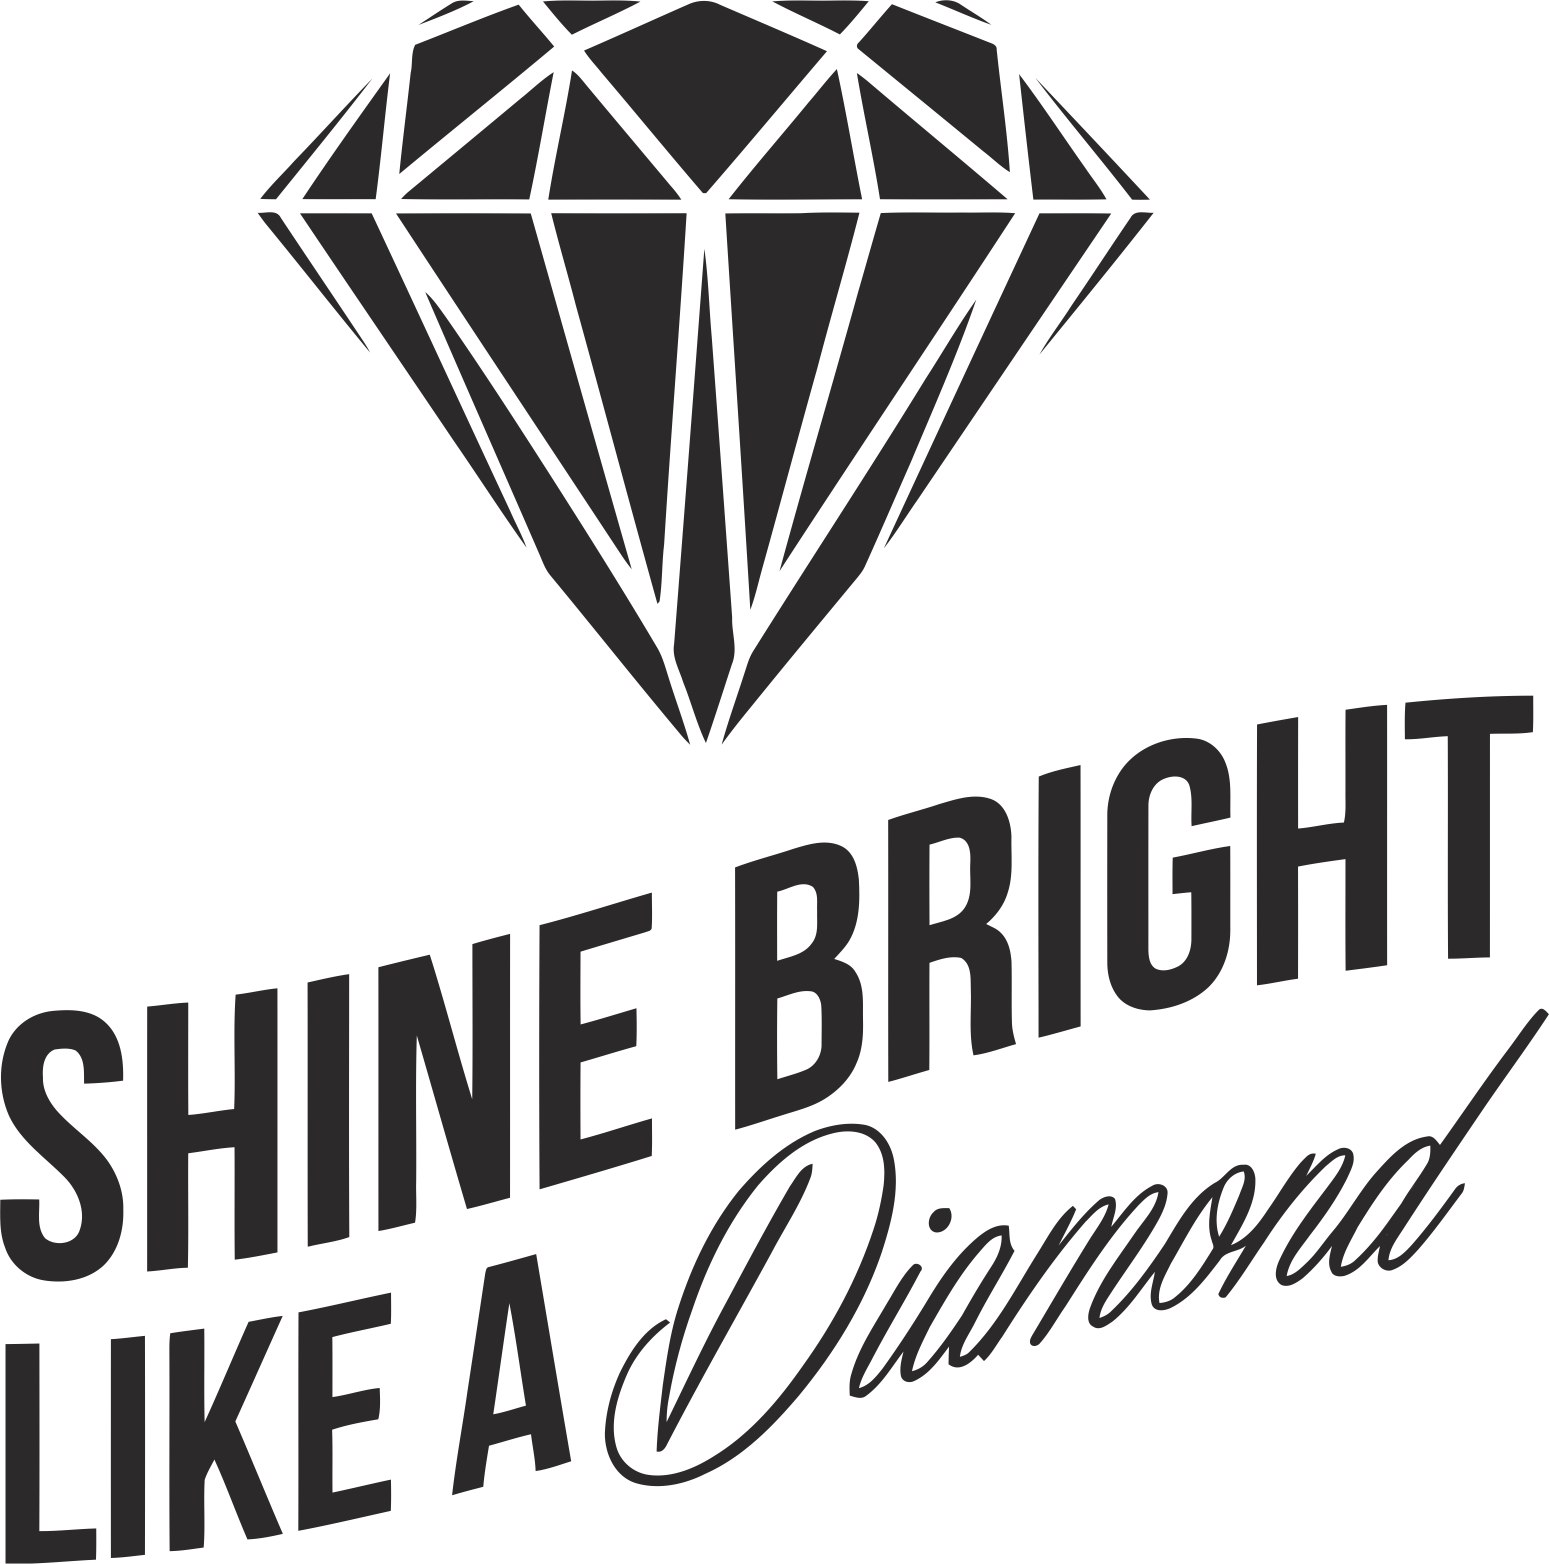 rihanna shine bright like a diamond free mp3 download